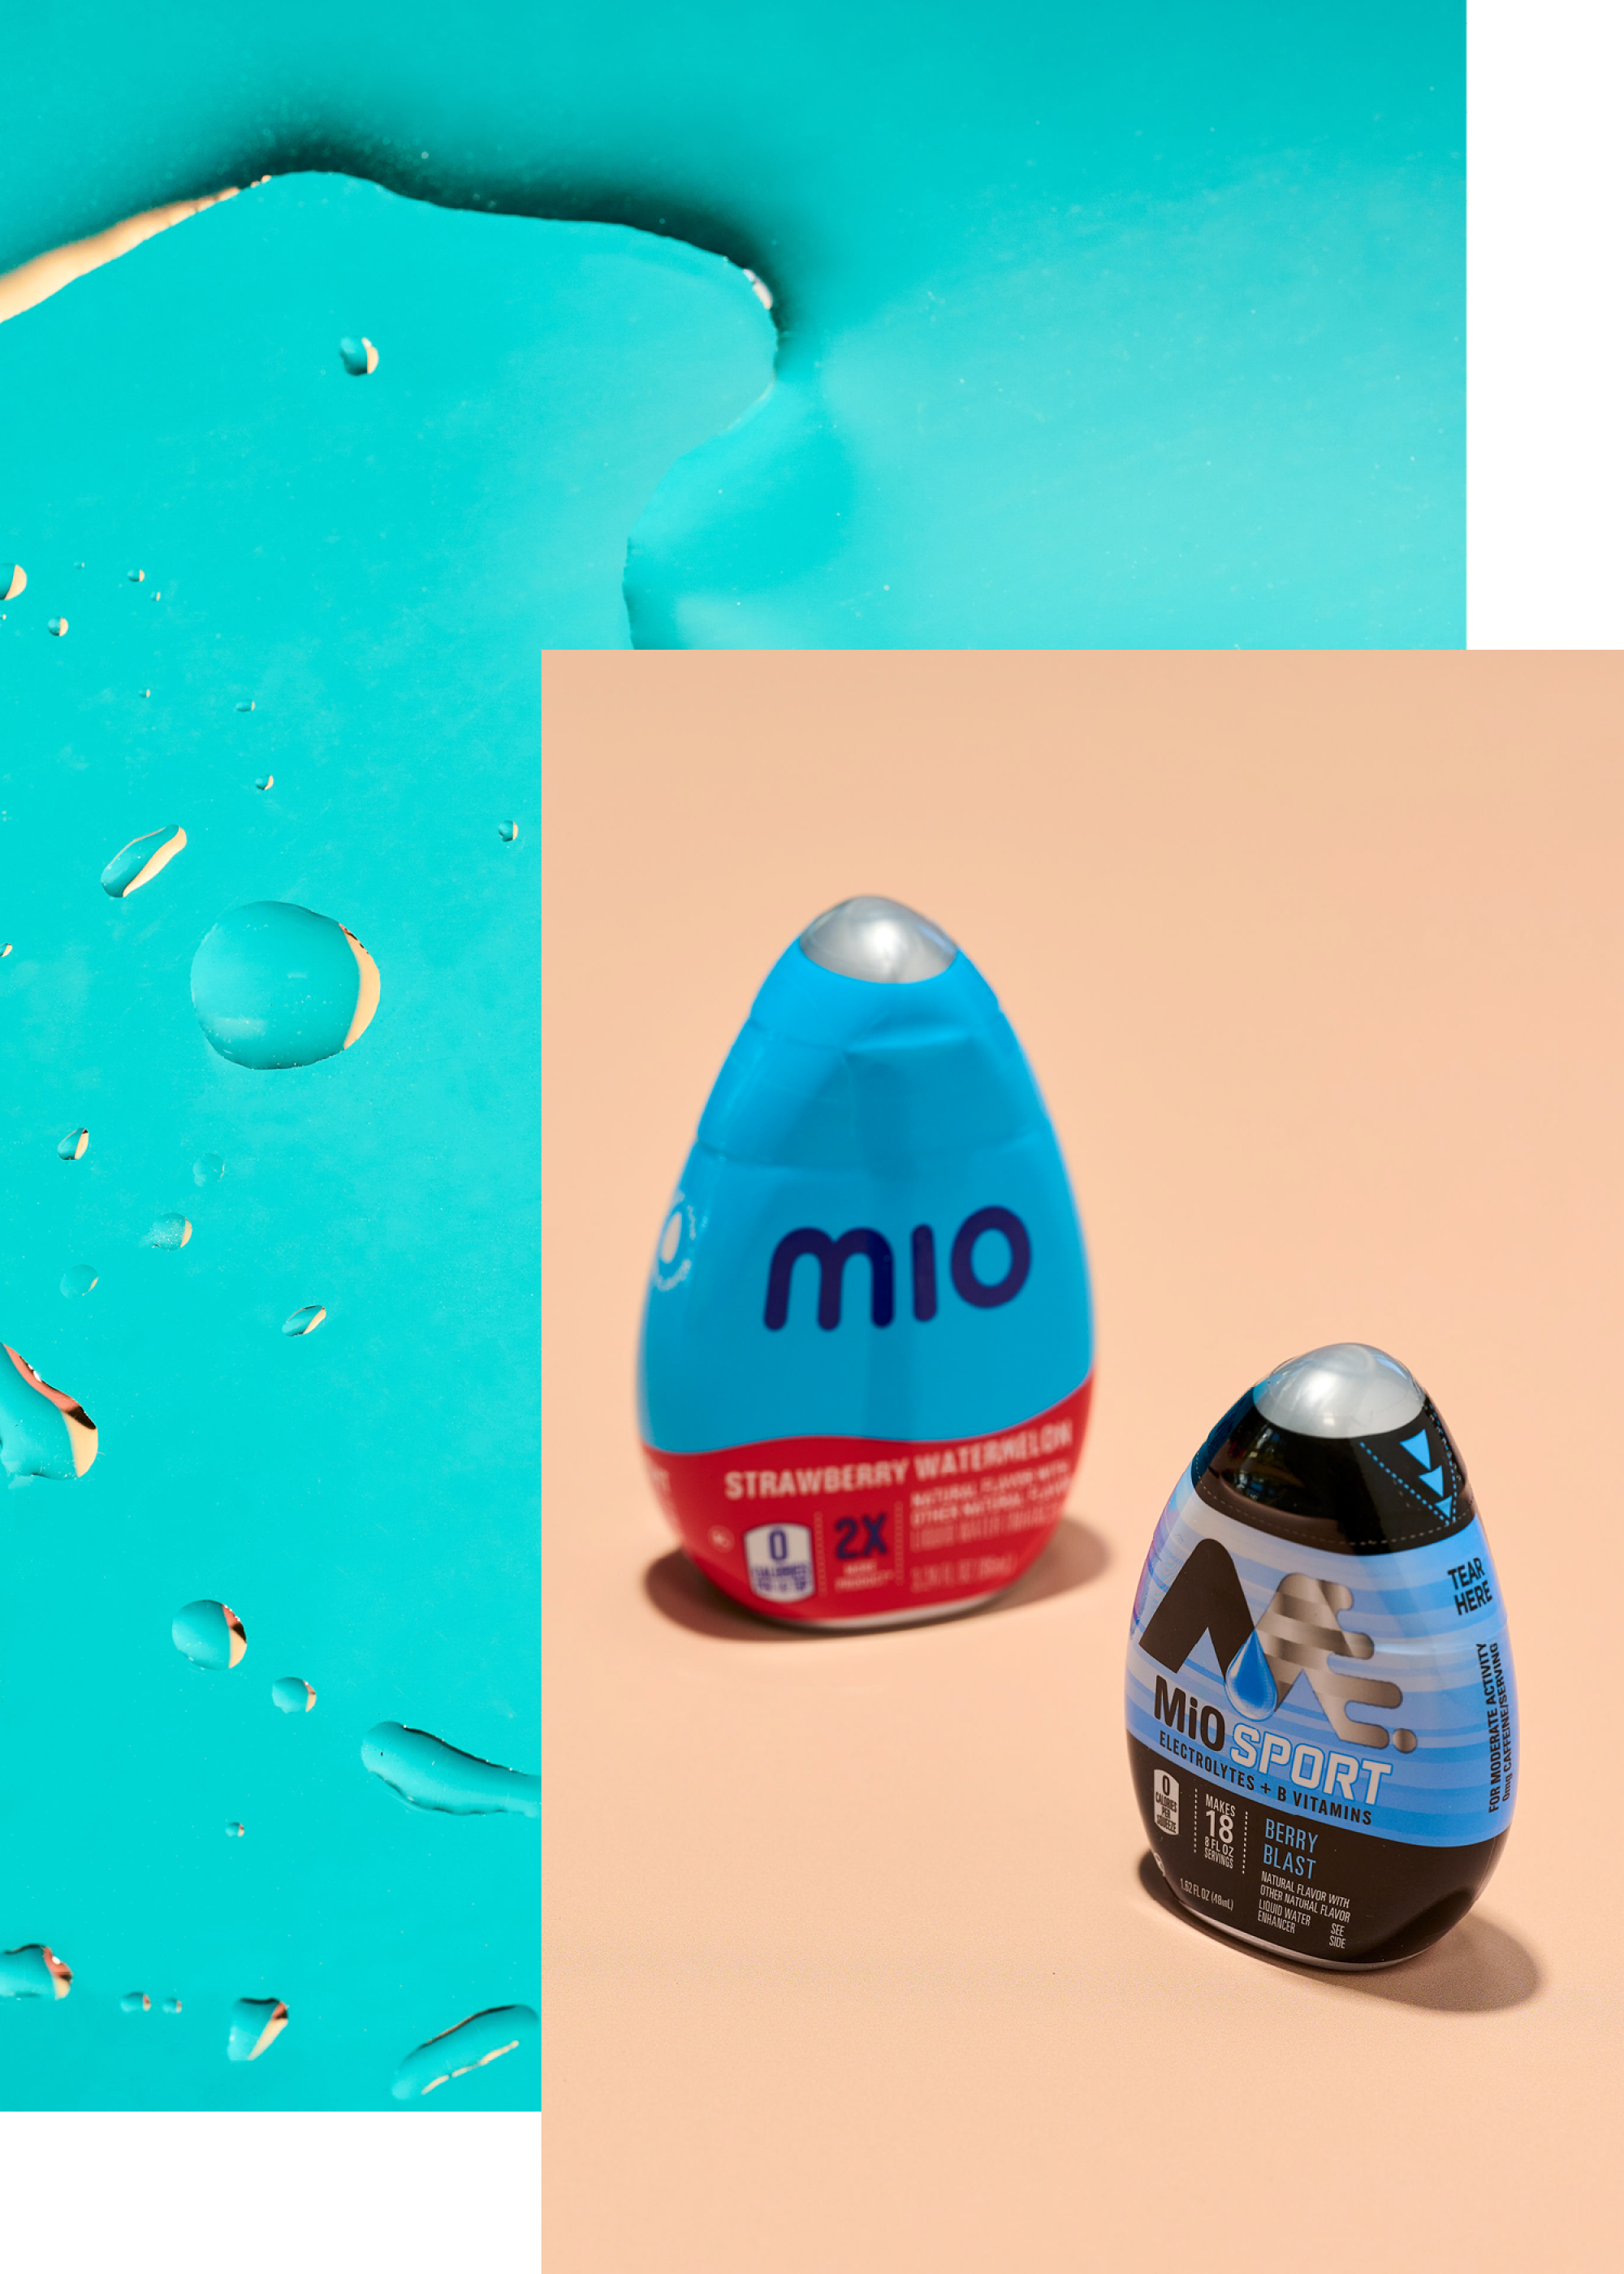 MIO Strawberry Watermelon Liquid Water Enhancer and MIO Sport Electrolytes + B Vitamins.